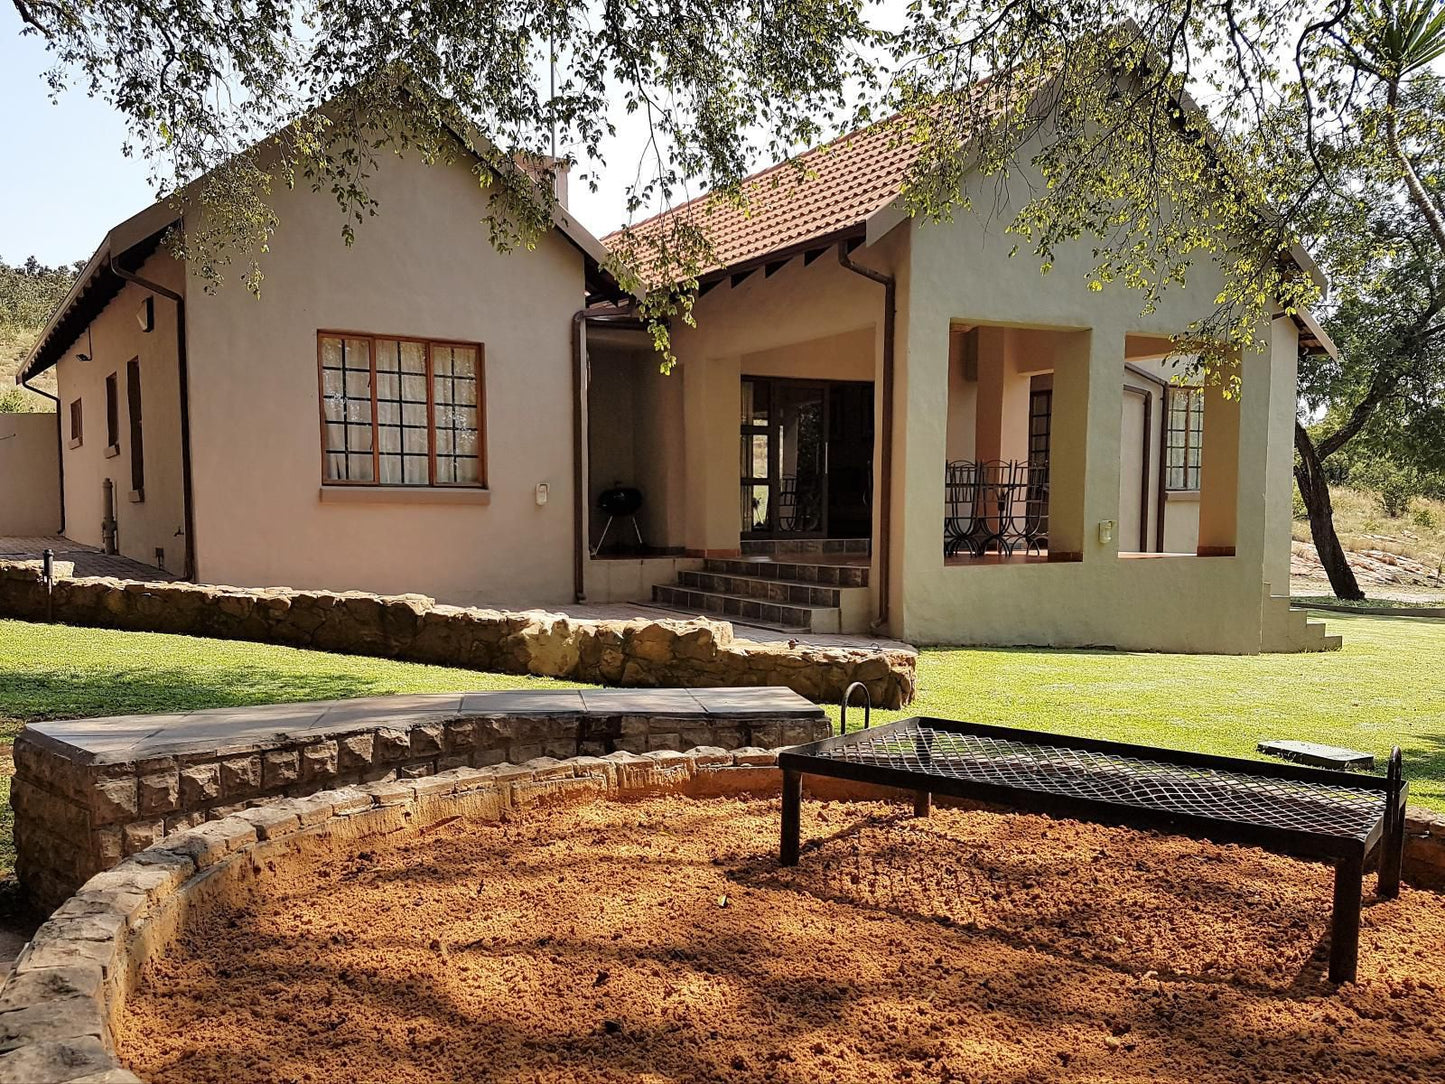 Zwavelpoort Guesthouse Mooikloof Pretoria Tshwane Gauteng South Africa House, Building, Architecture